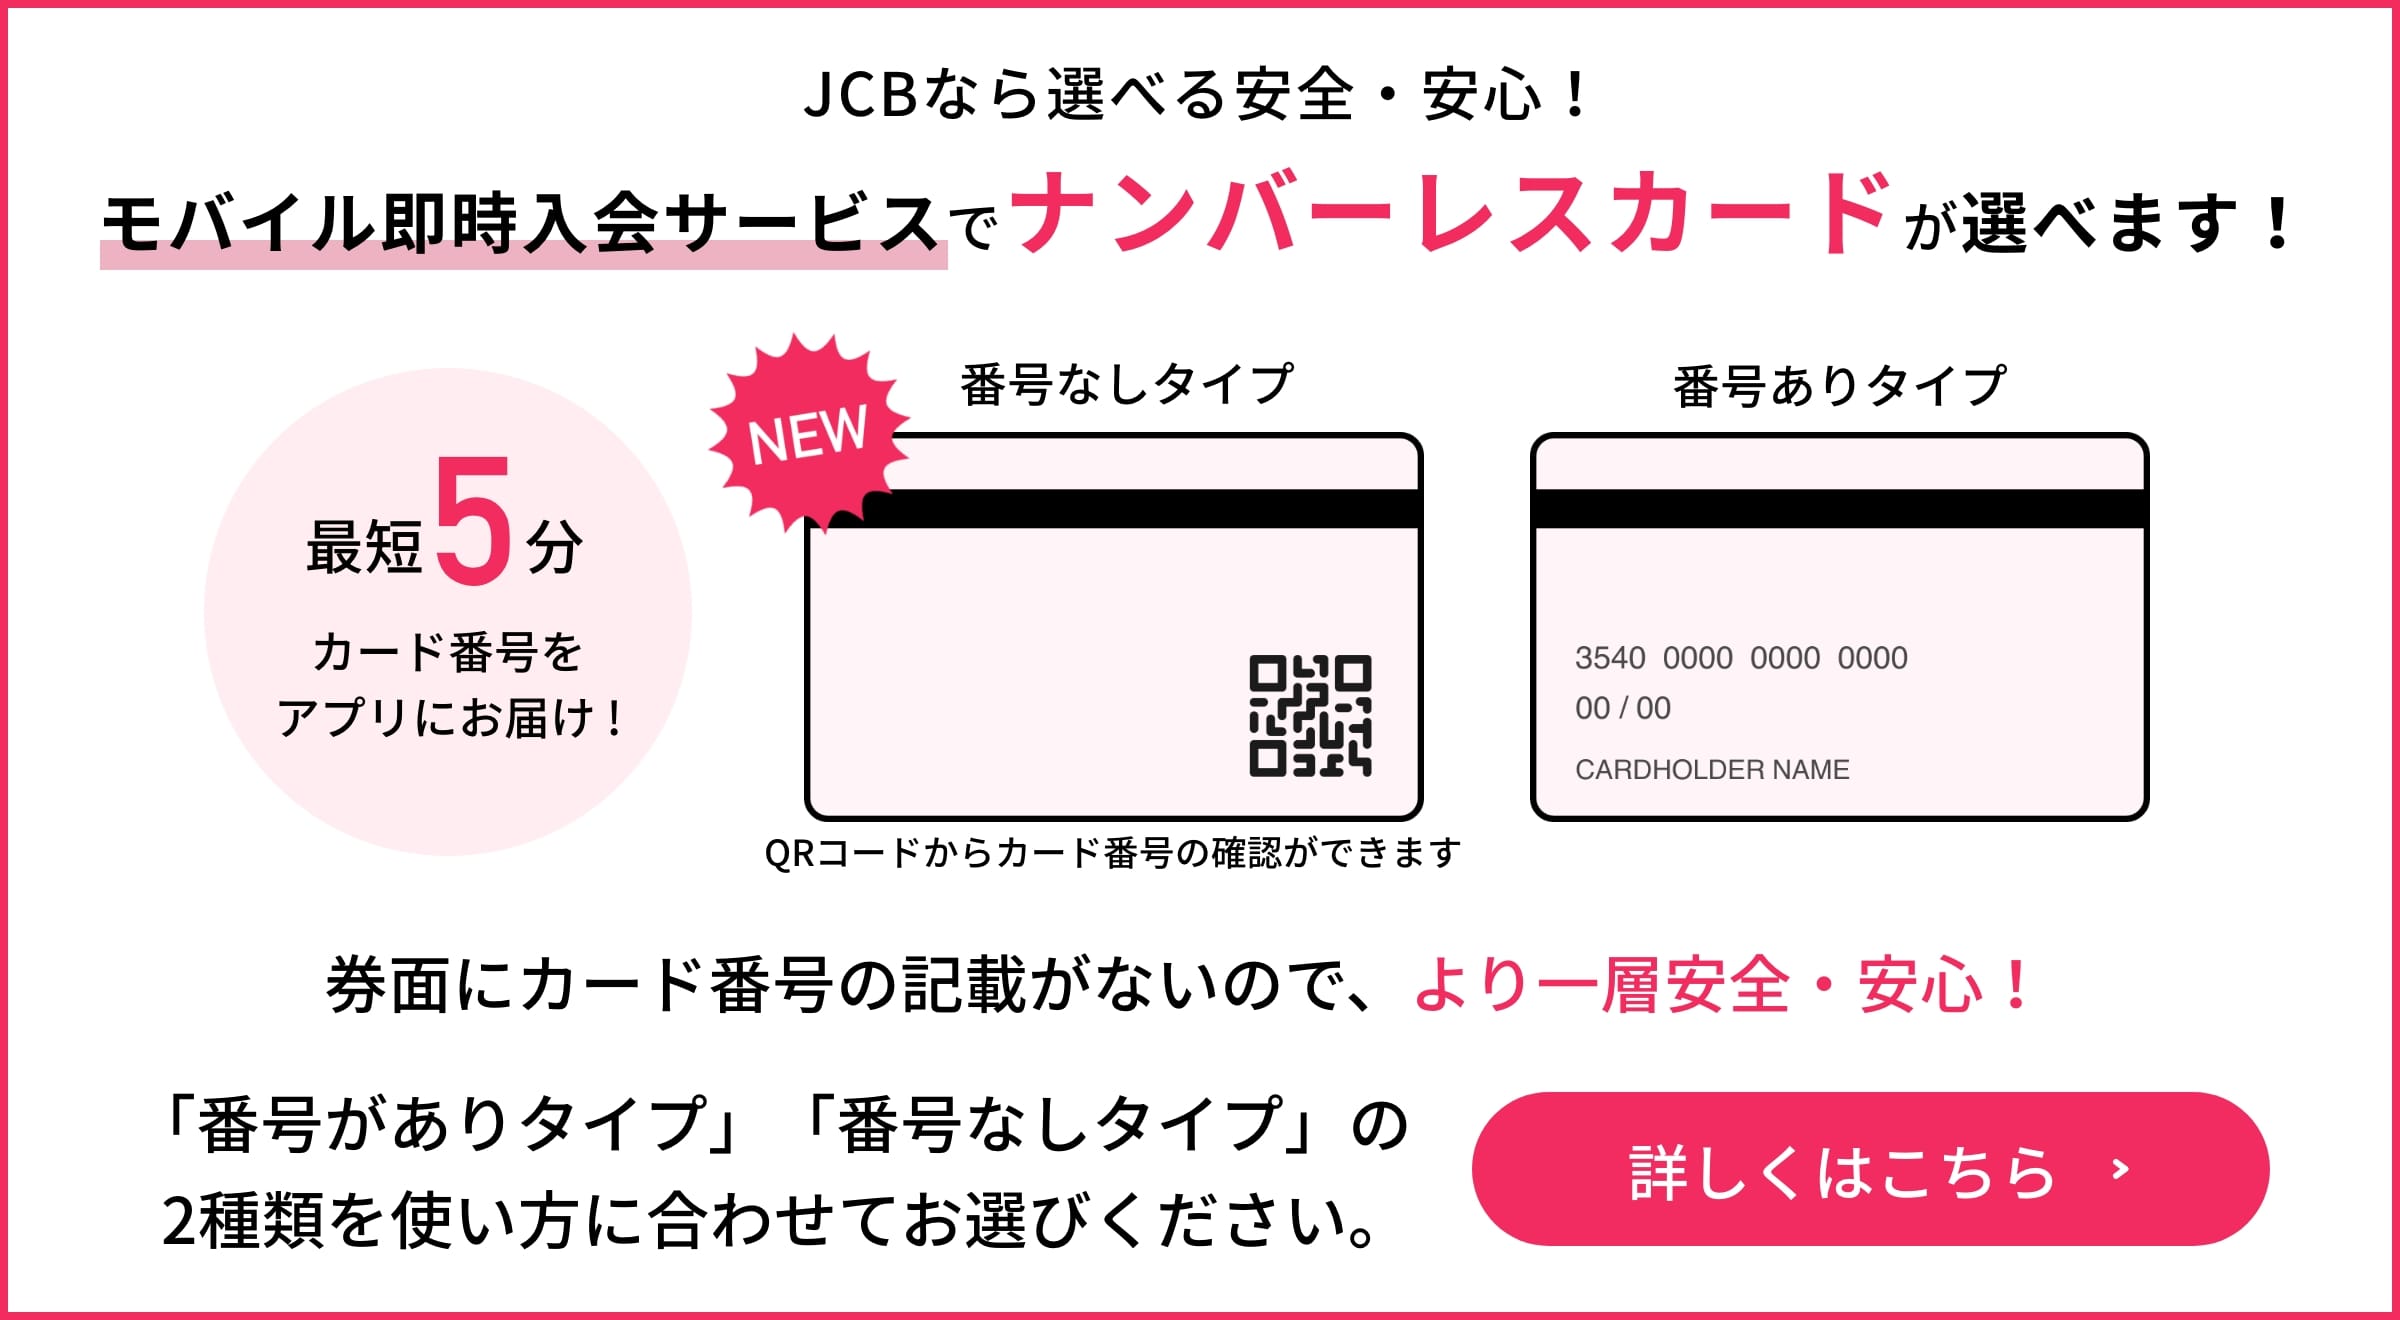 JCBなら選べる安全・安心！モバイル即時入会サービスに、ナンバーレスカードが新登場！最短5分でカード番号をアプリにお届け！詳しくはこちら